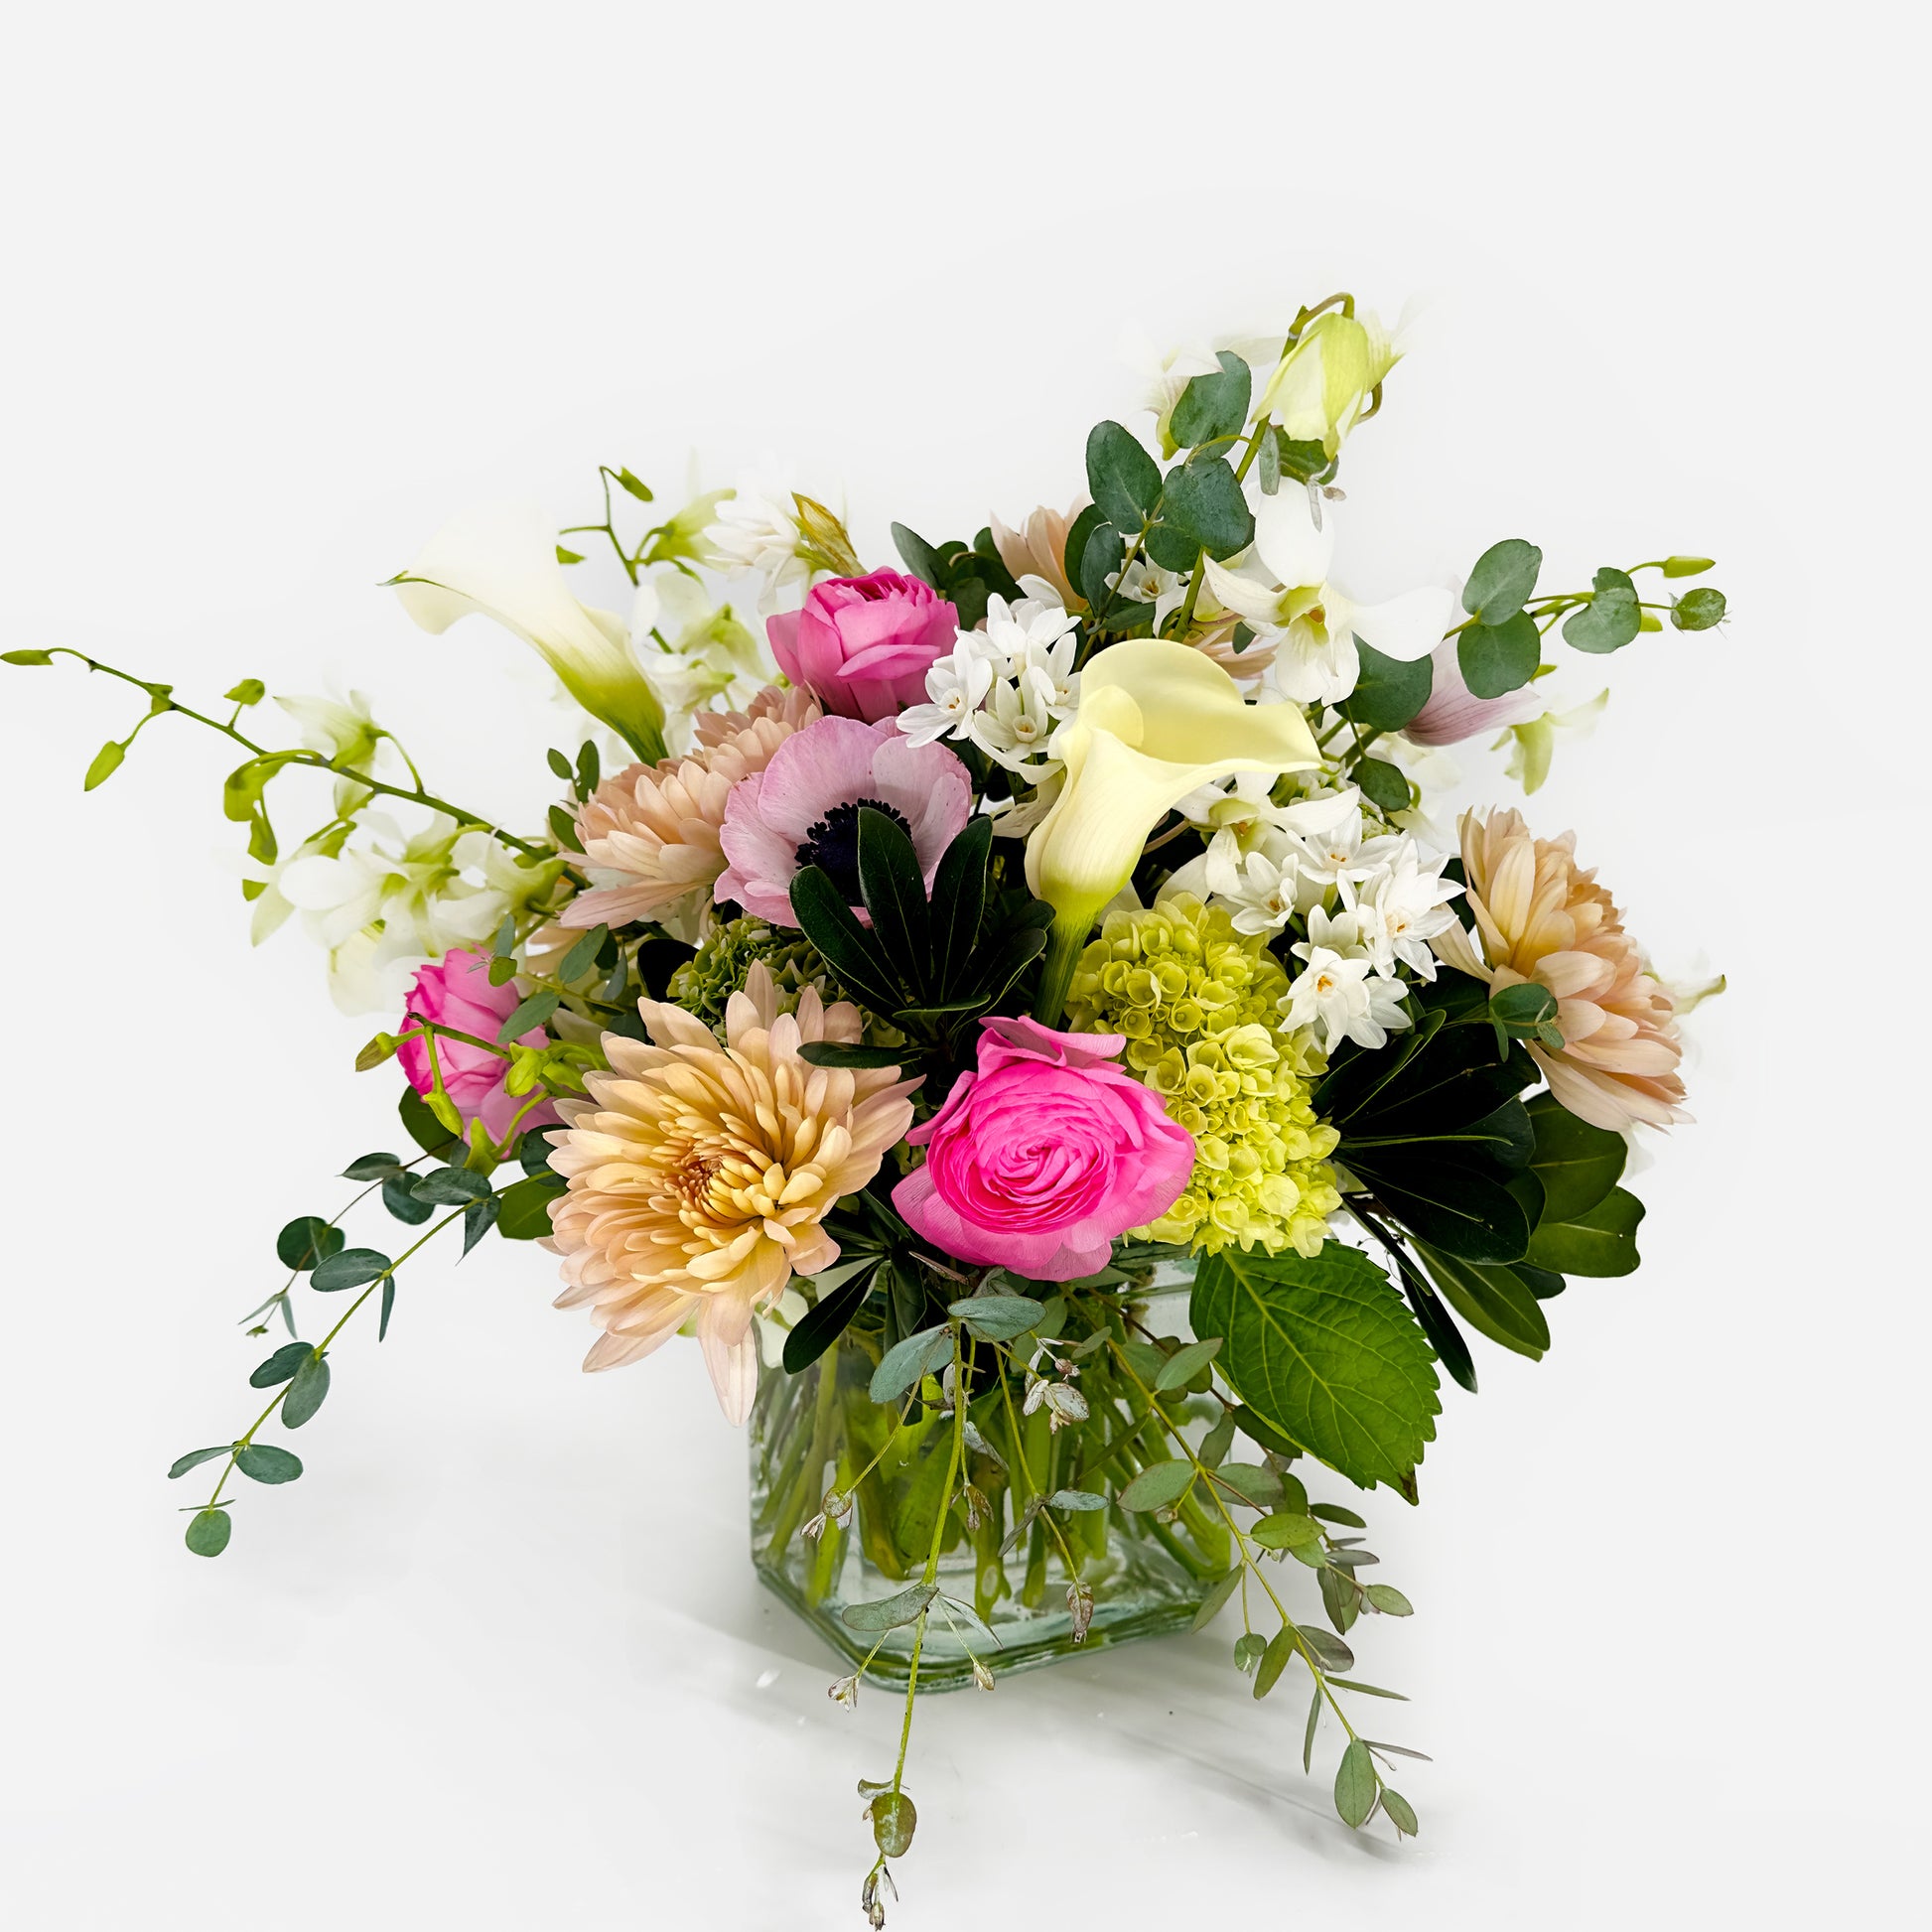 Flower arrangement - small. Order online for delivery or pickup in Santa Fe